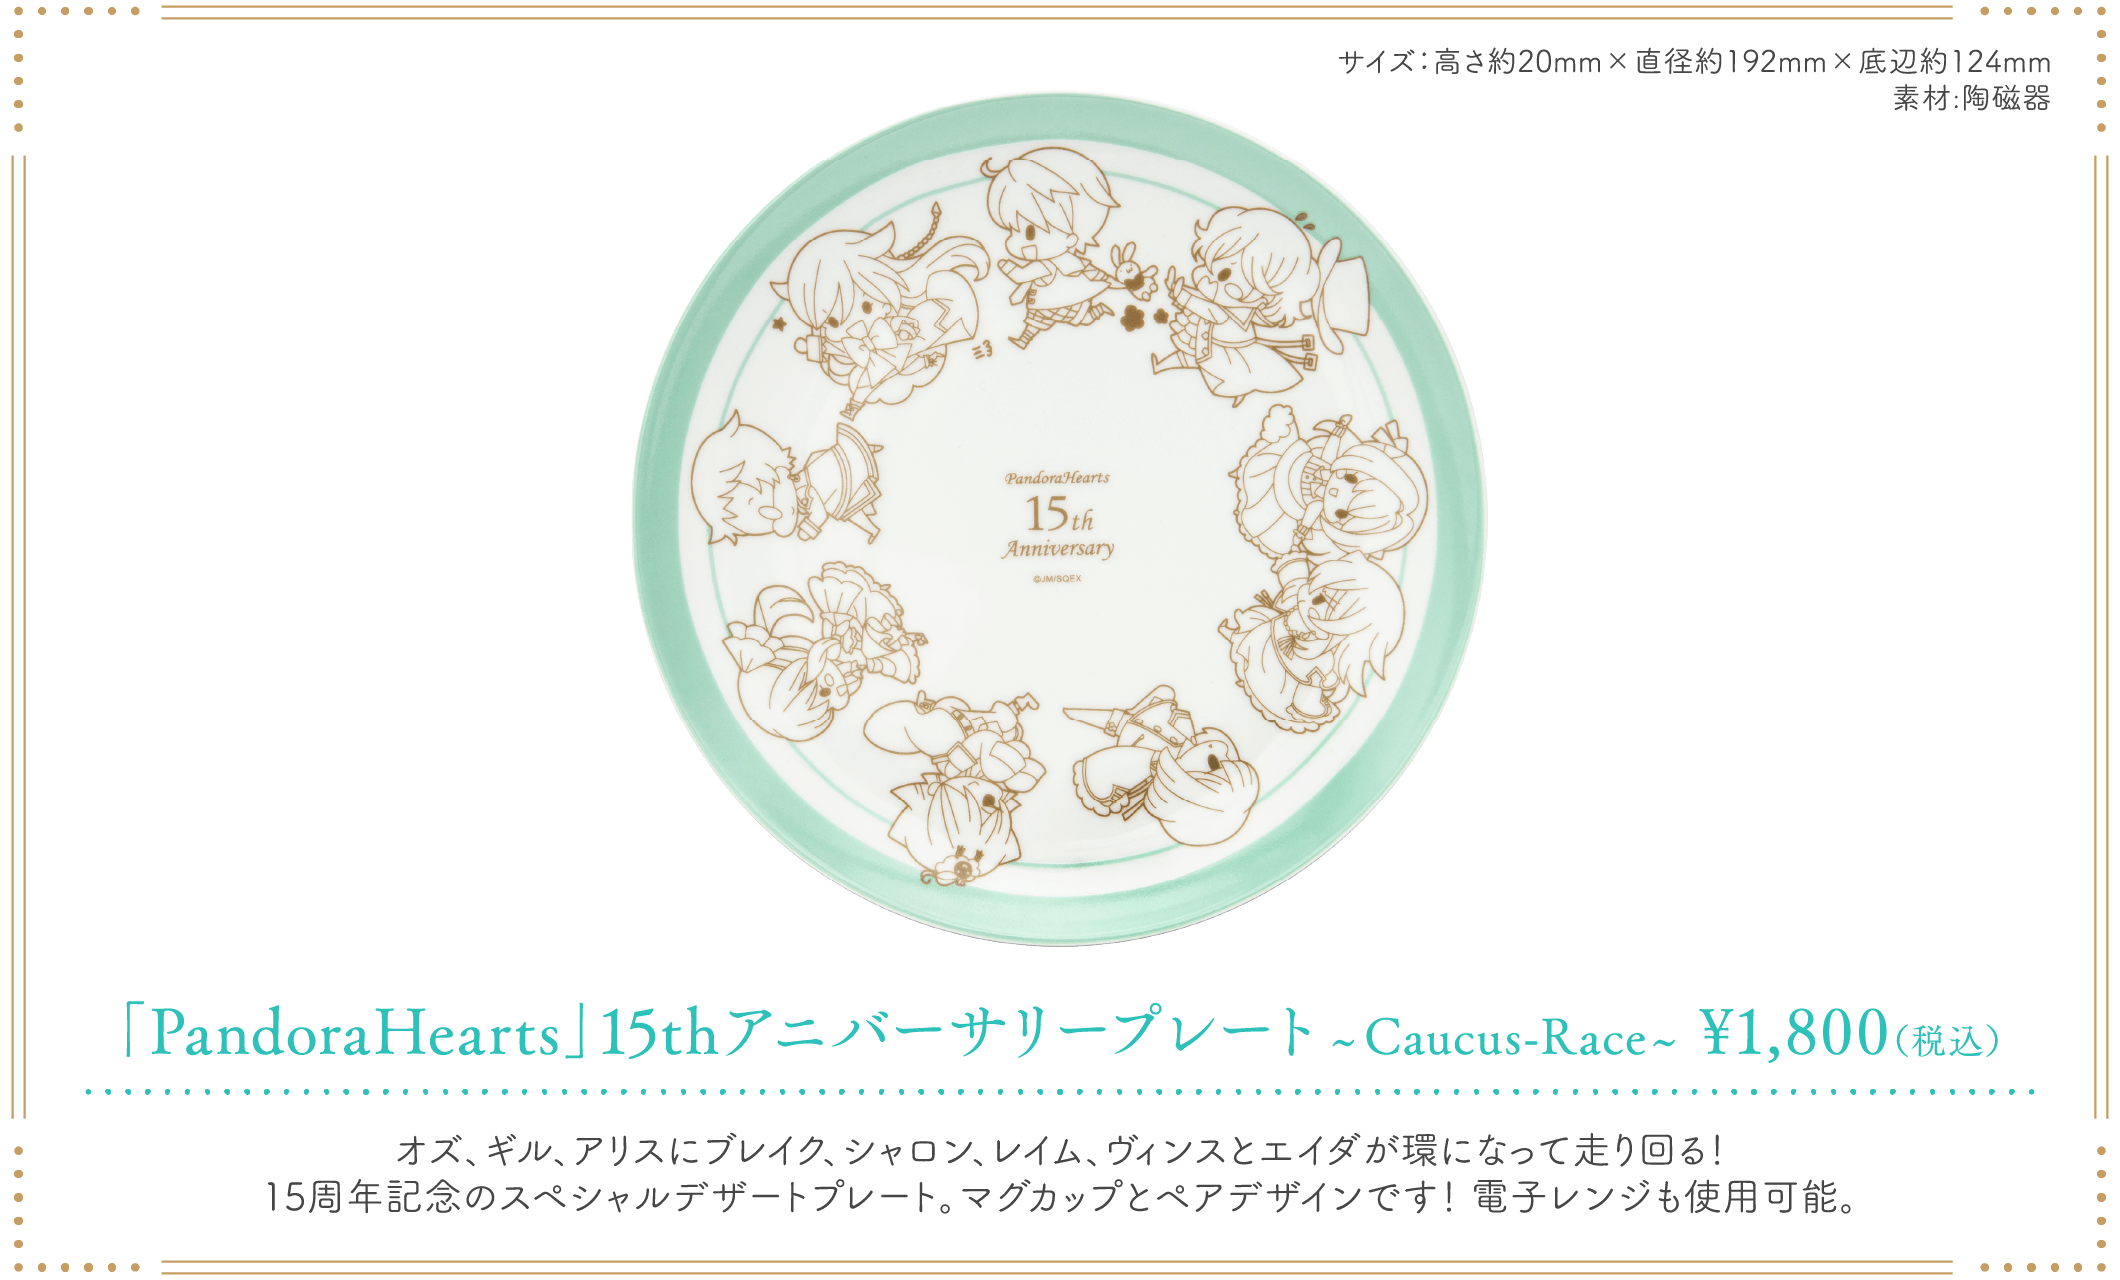 「PandoraHearts 15th Anniversary Cafe」アニバーサリープレート〜Caucus race〜